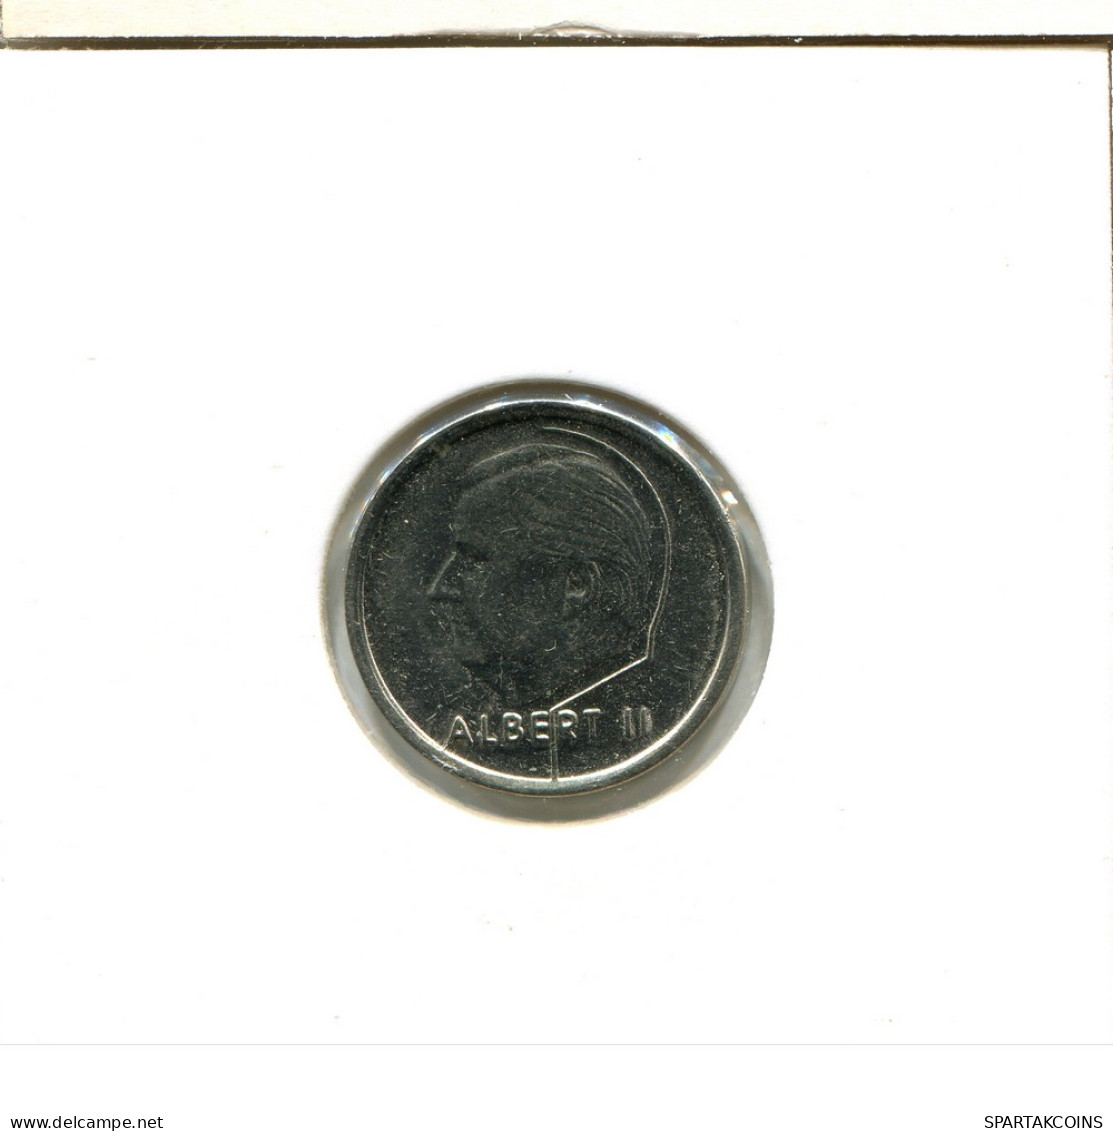 1 FRANC 1995 DUTCH Text BELGIUM Coin #AU108.U - 1 Franc